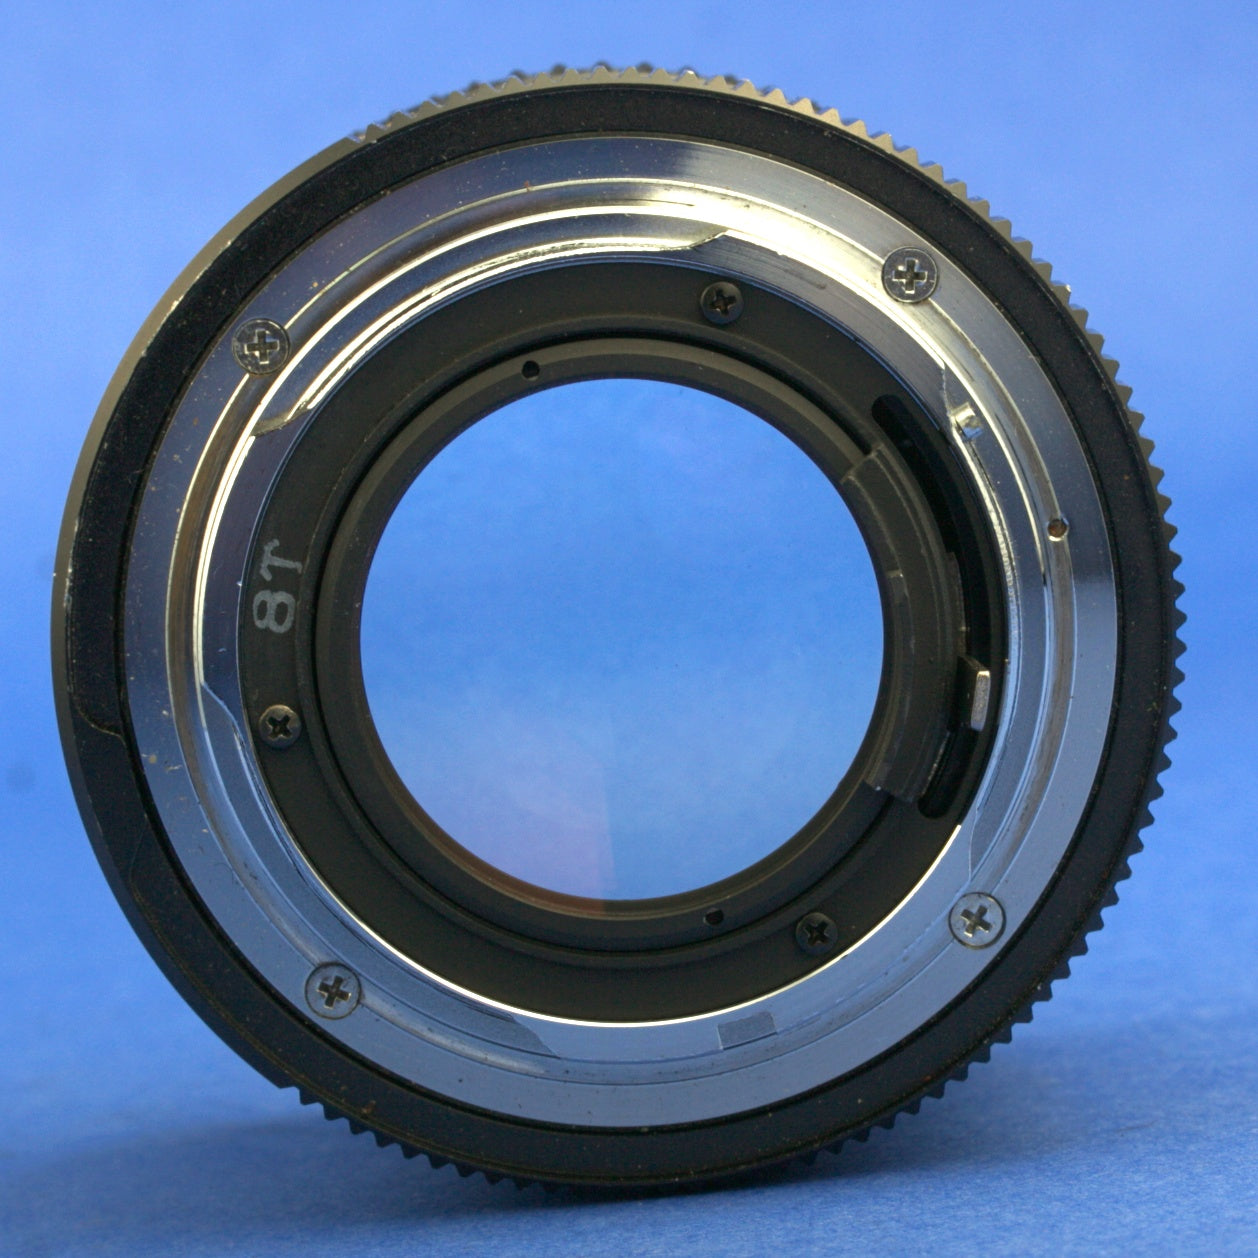 Konica Hexanon AR 50mm 1.4 Lens Late Version